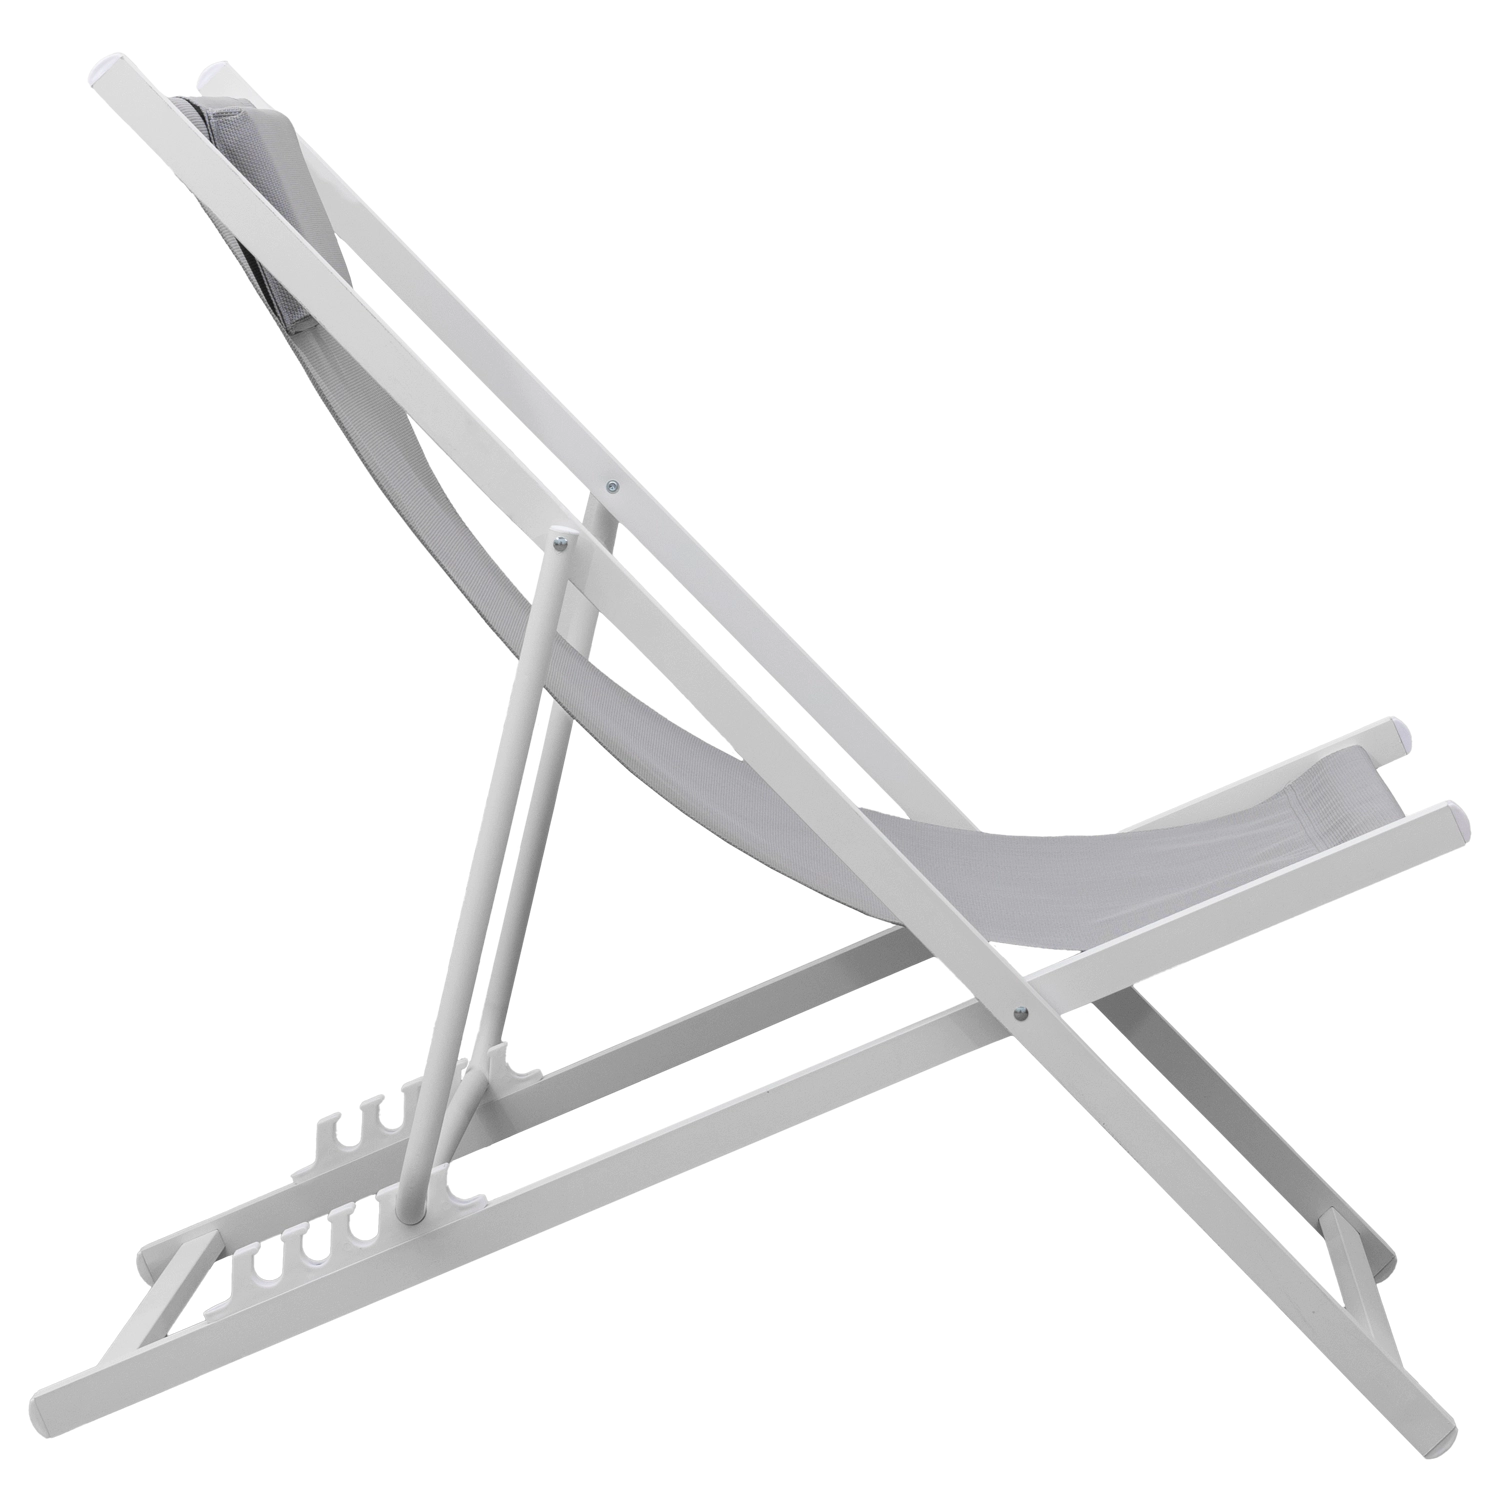 Conjunto de 2 cadeiras CYPRUS - estrutura em textileno cinzento/branco